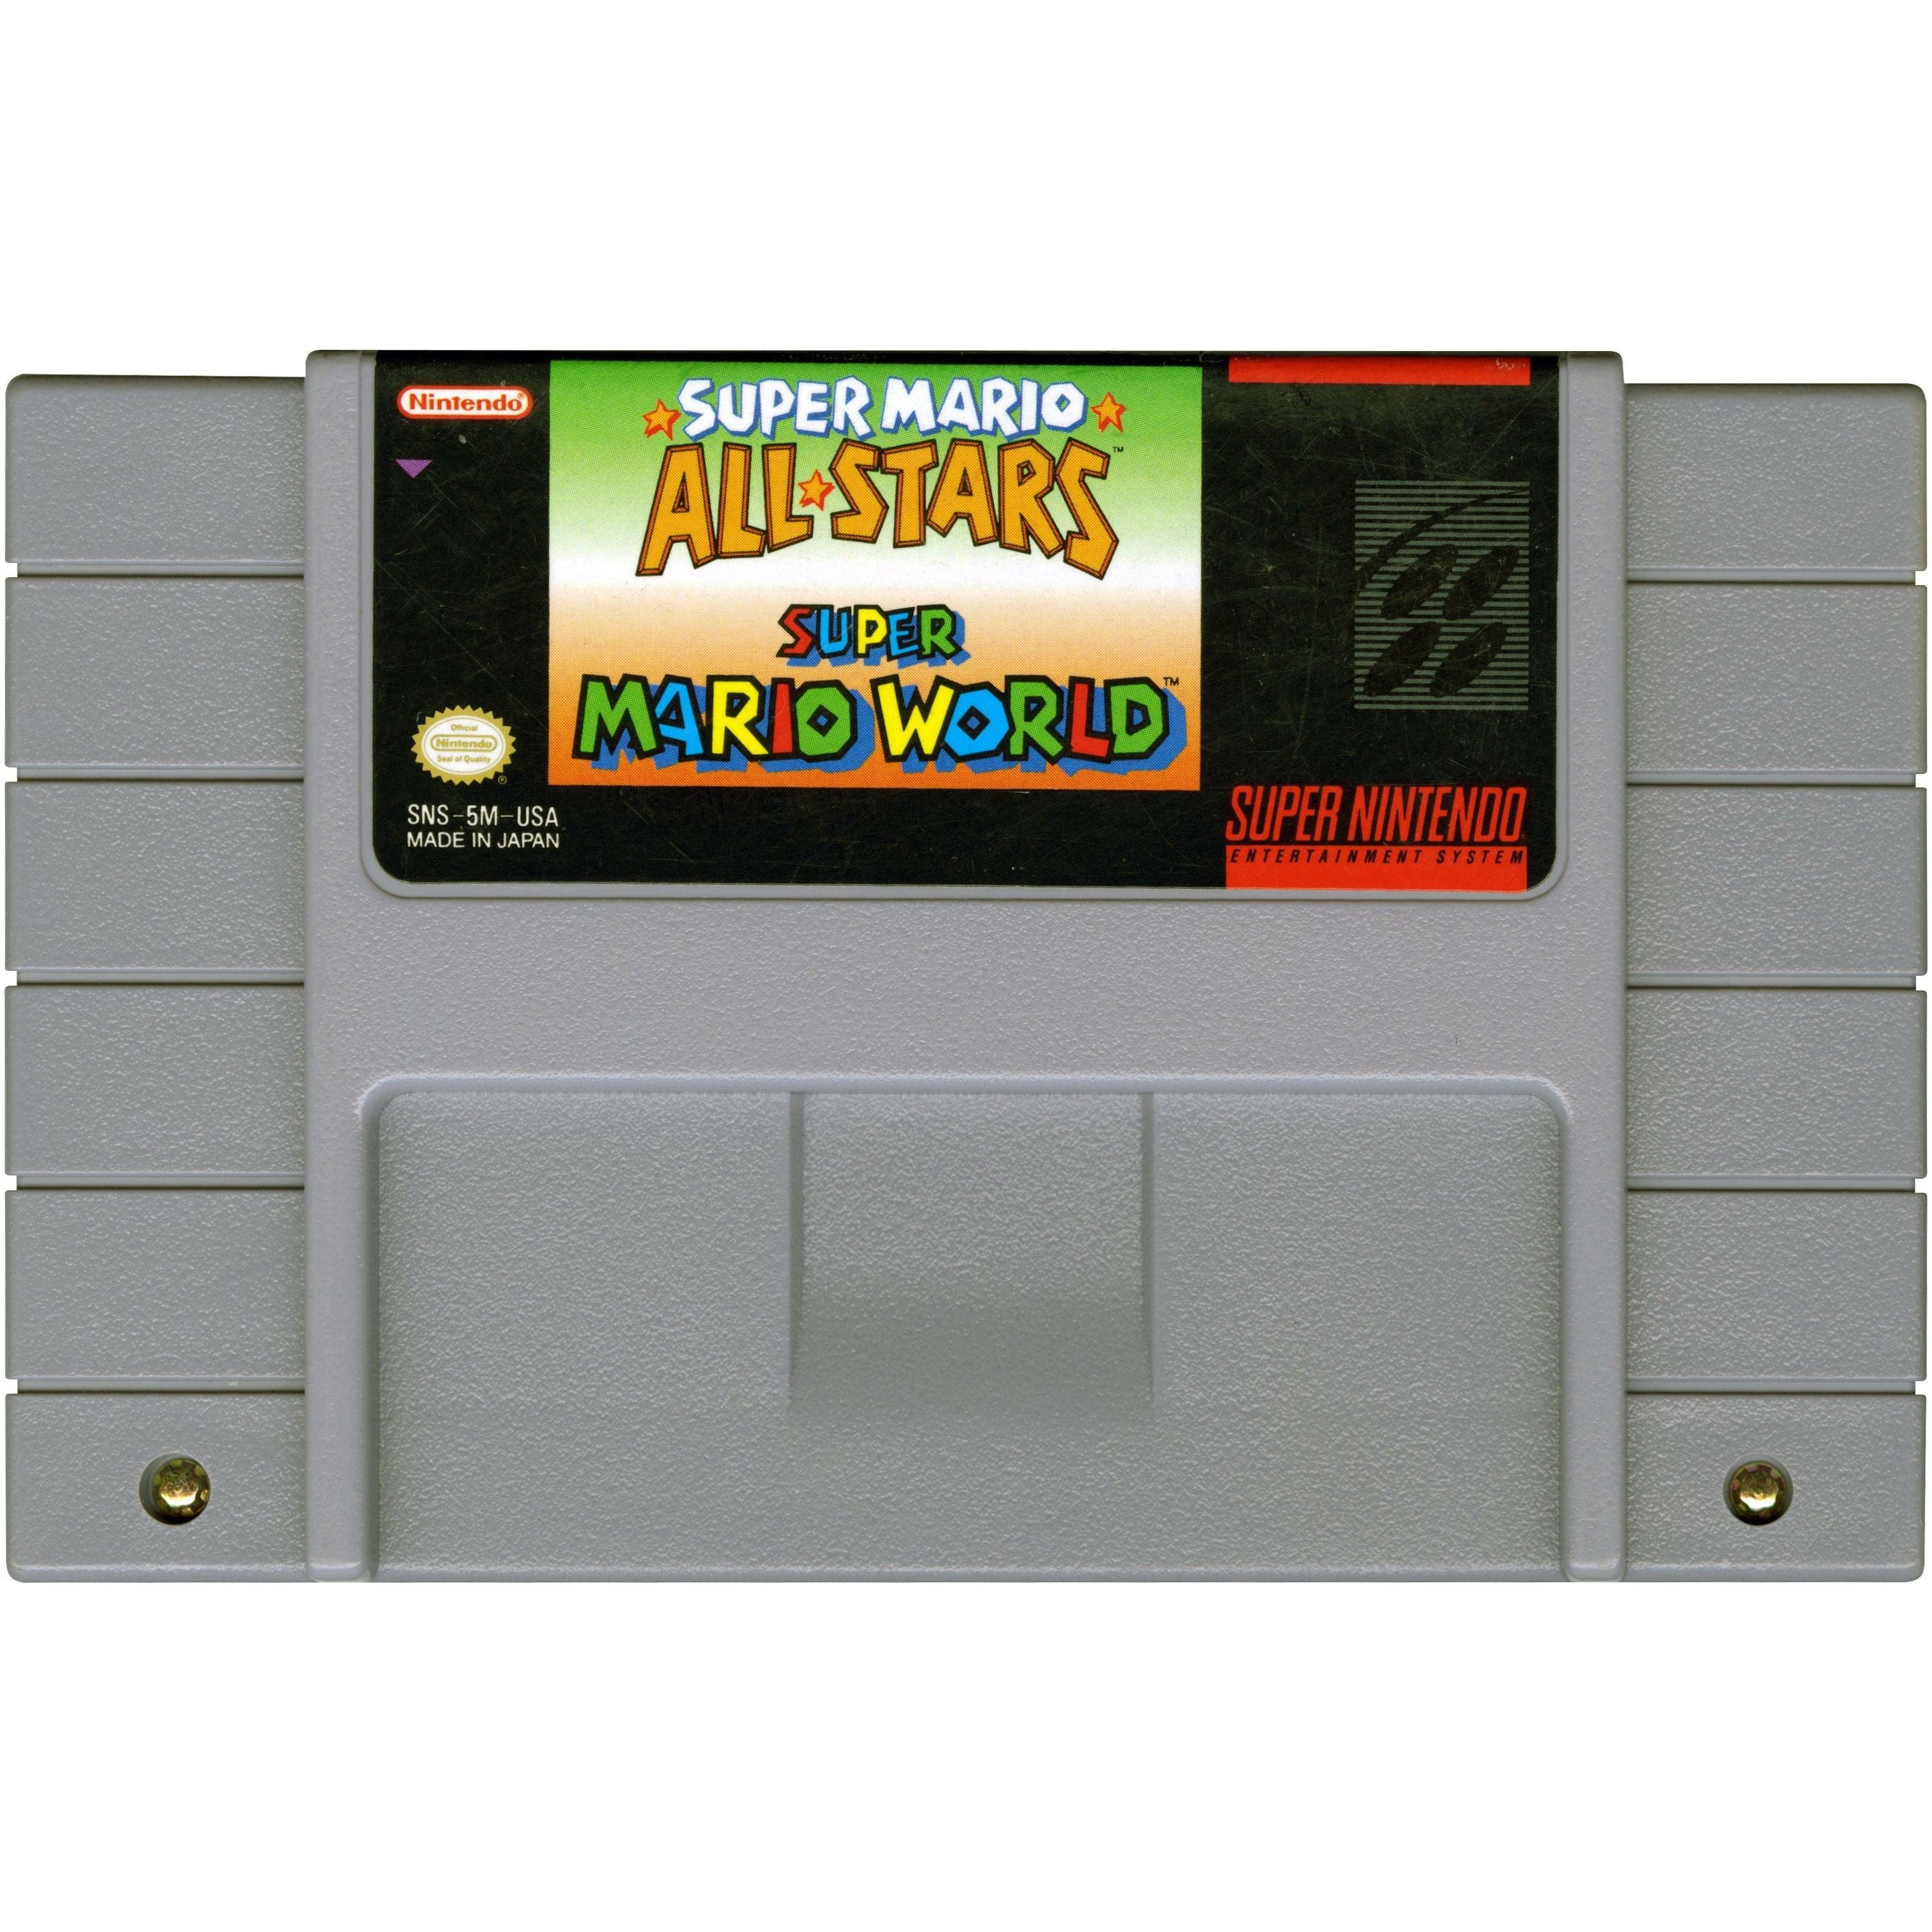 SNES - Super Mario All-Stars & Super Mario World (Cartridge Only)